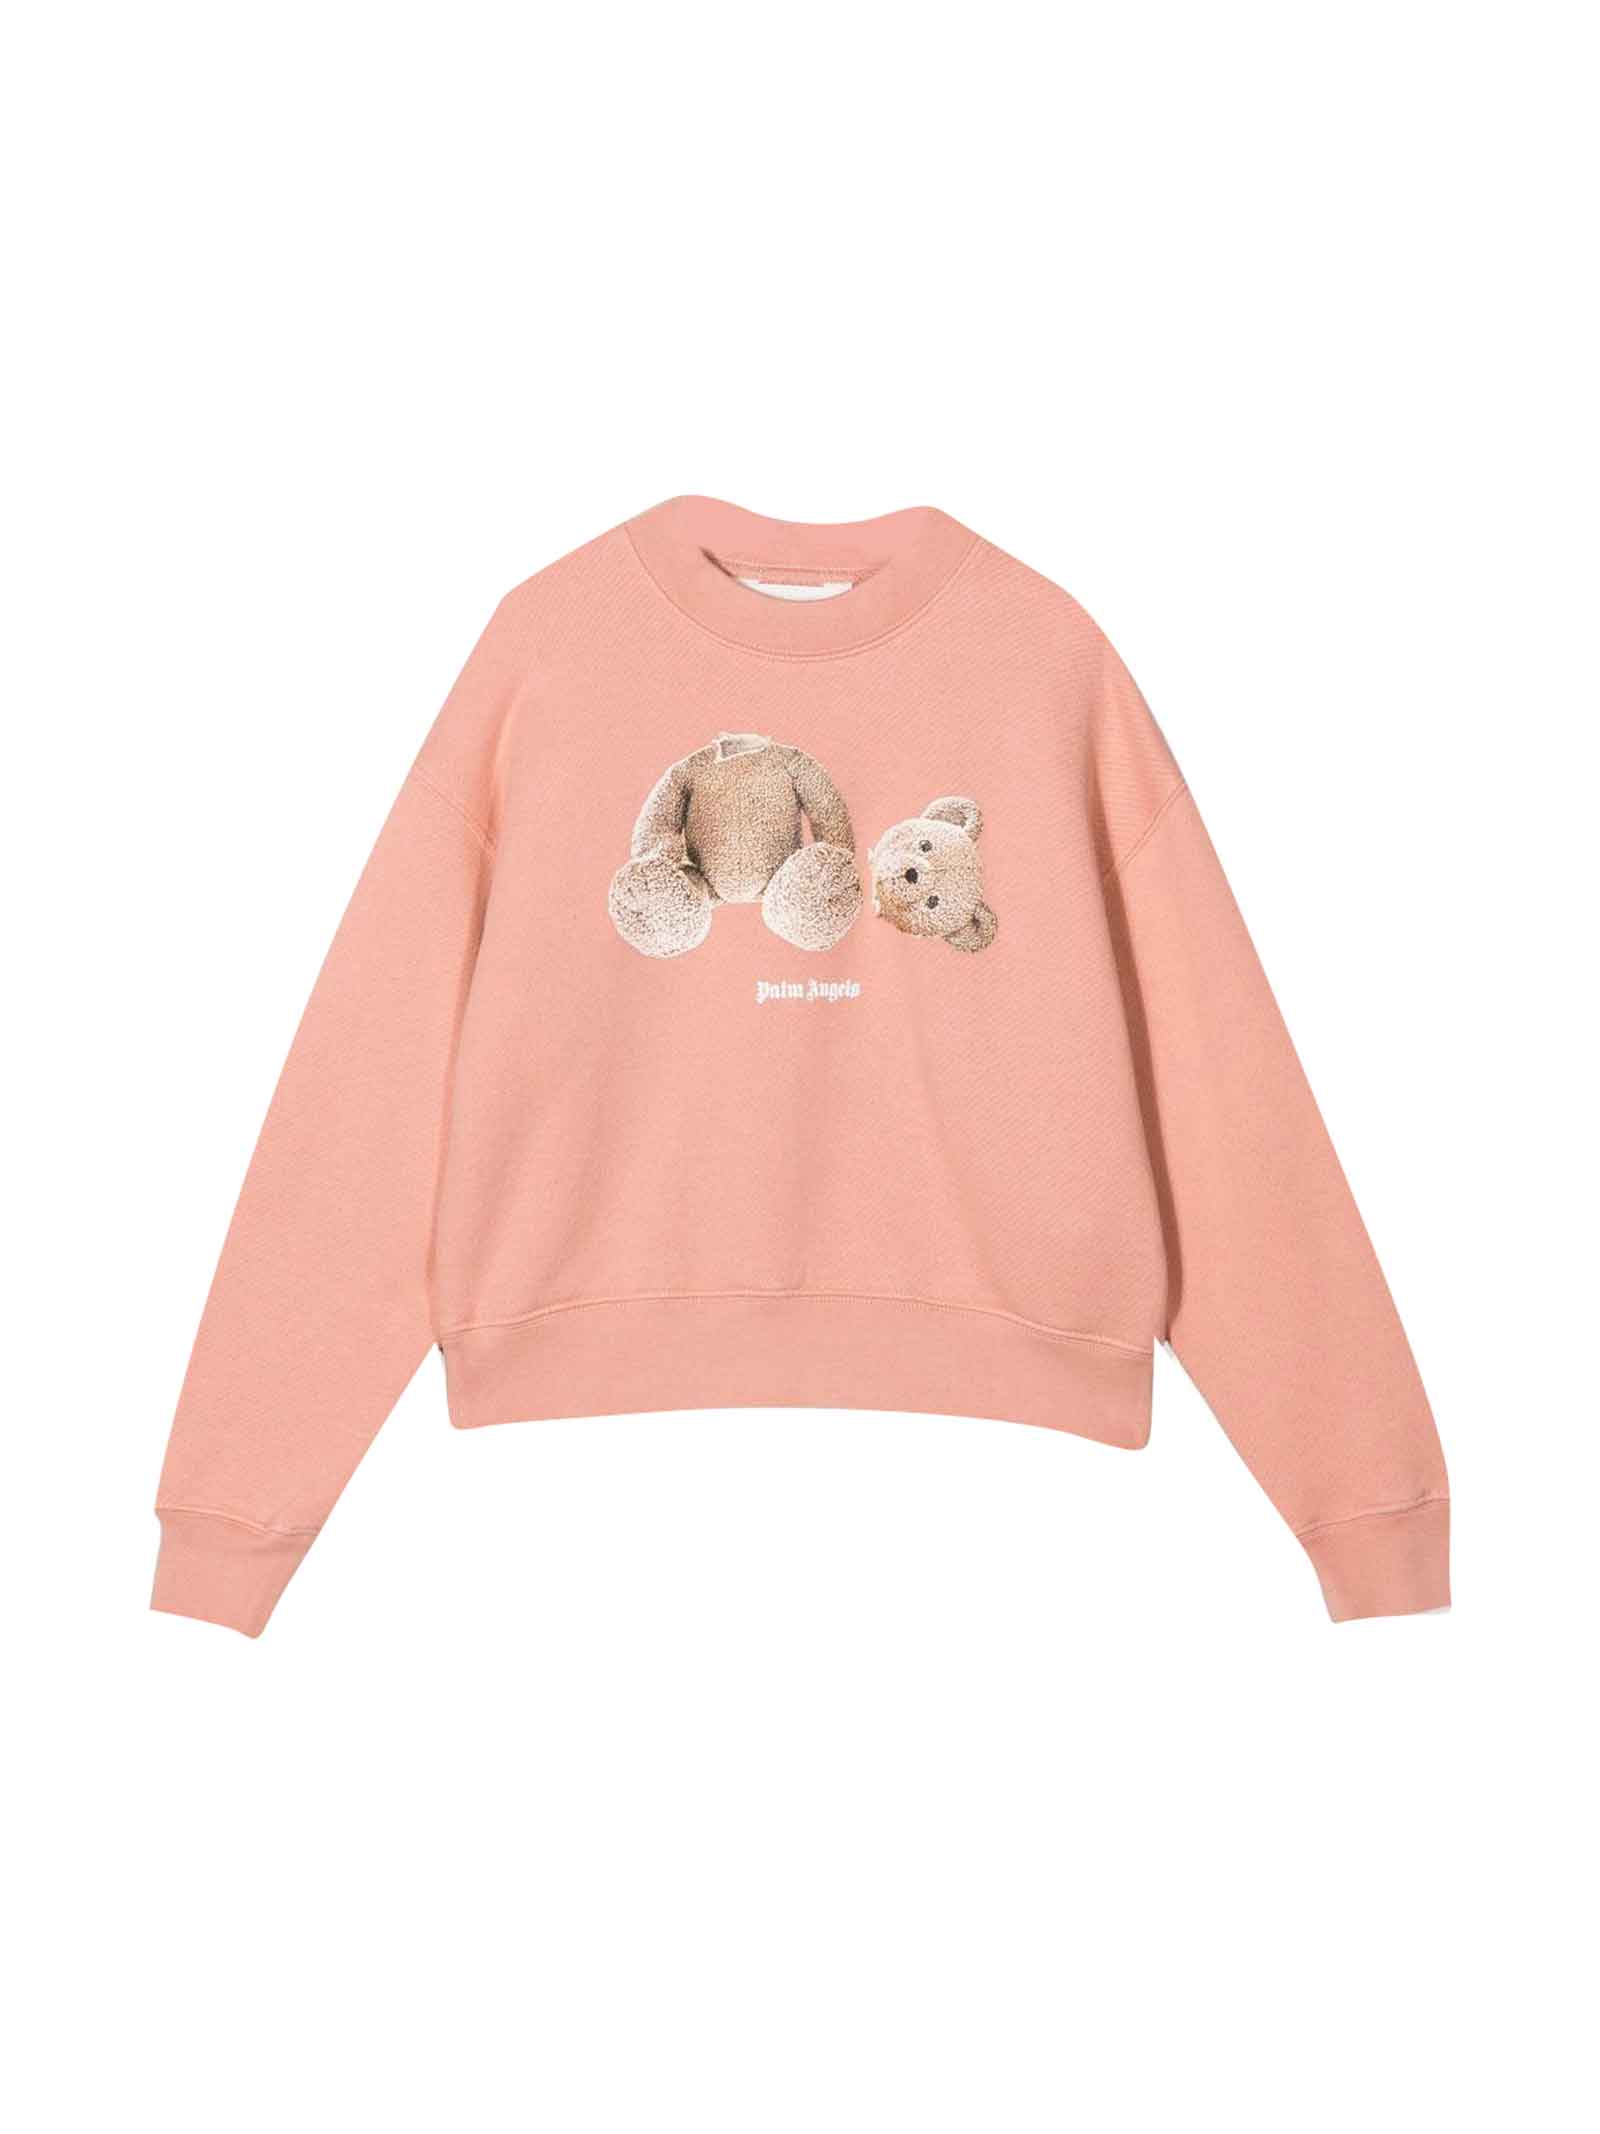 Palm Angels Girl Sweatshirt Print With Teddy